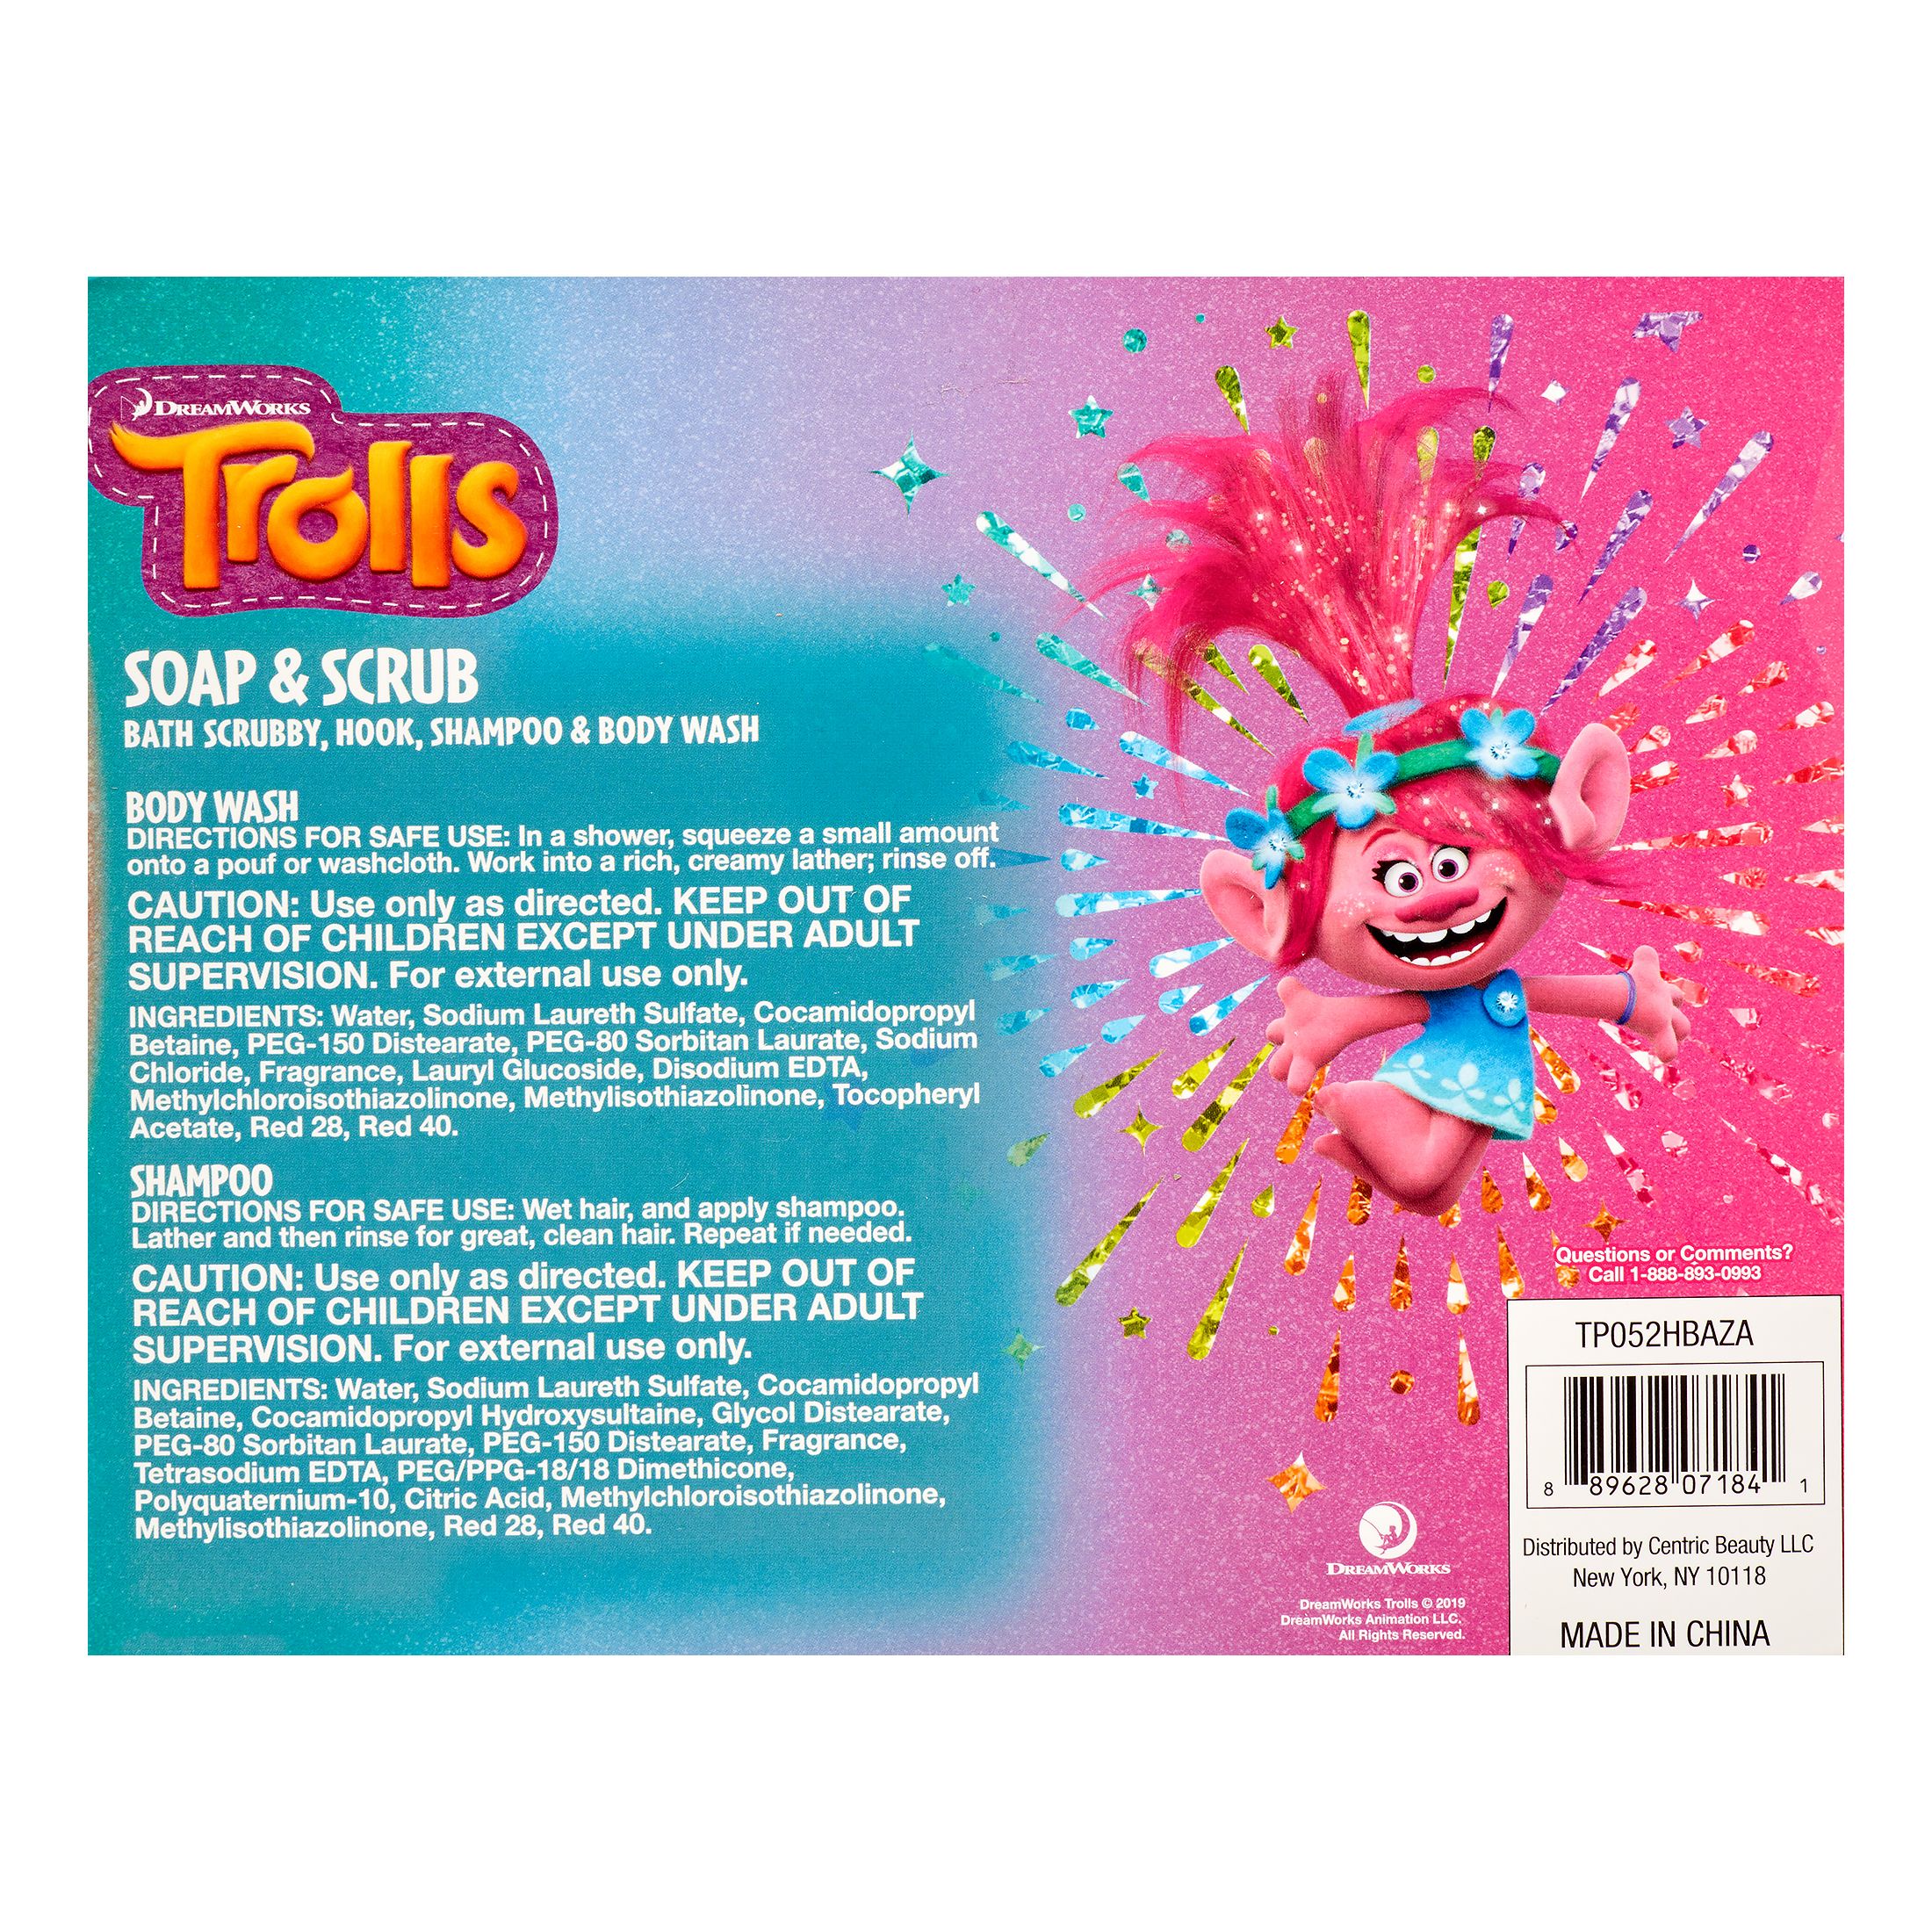 DreamWorks Trolls 4-Piece Soap and Scrub Body Wash and Shampoo Set - image 4 of 5